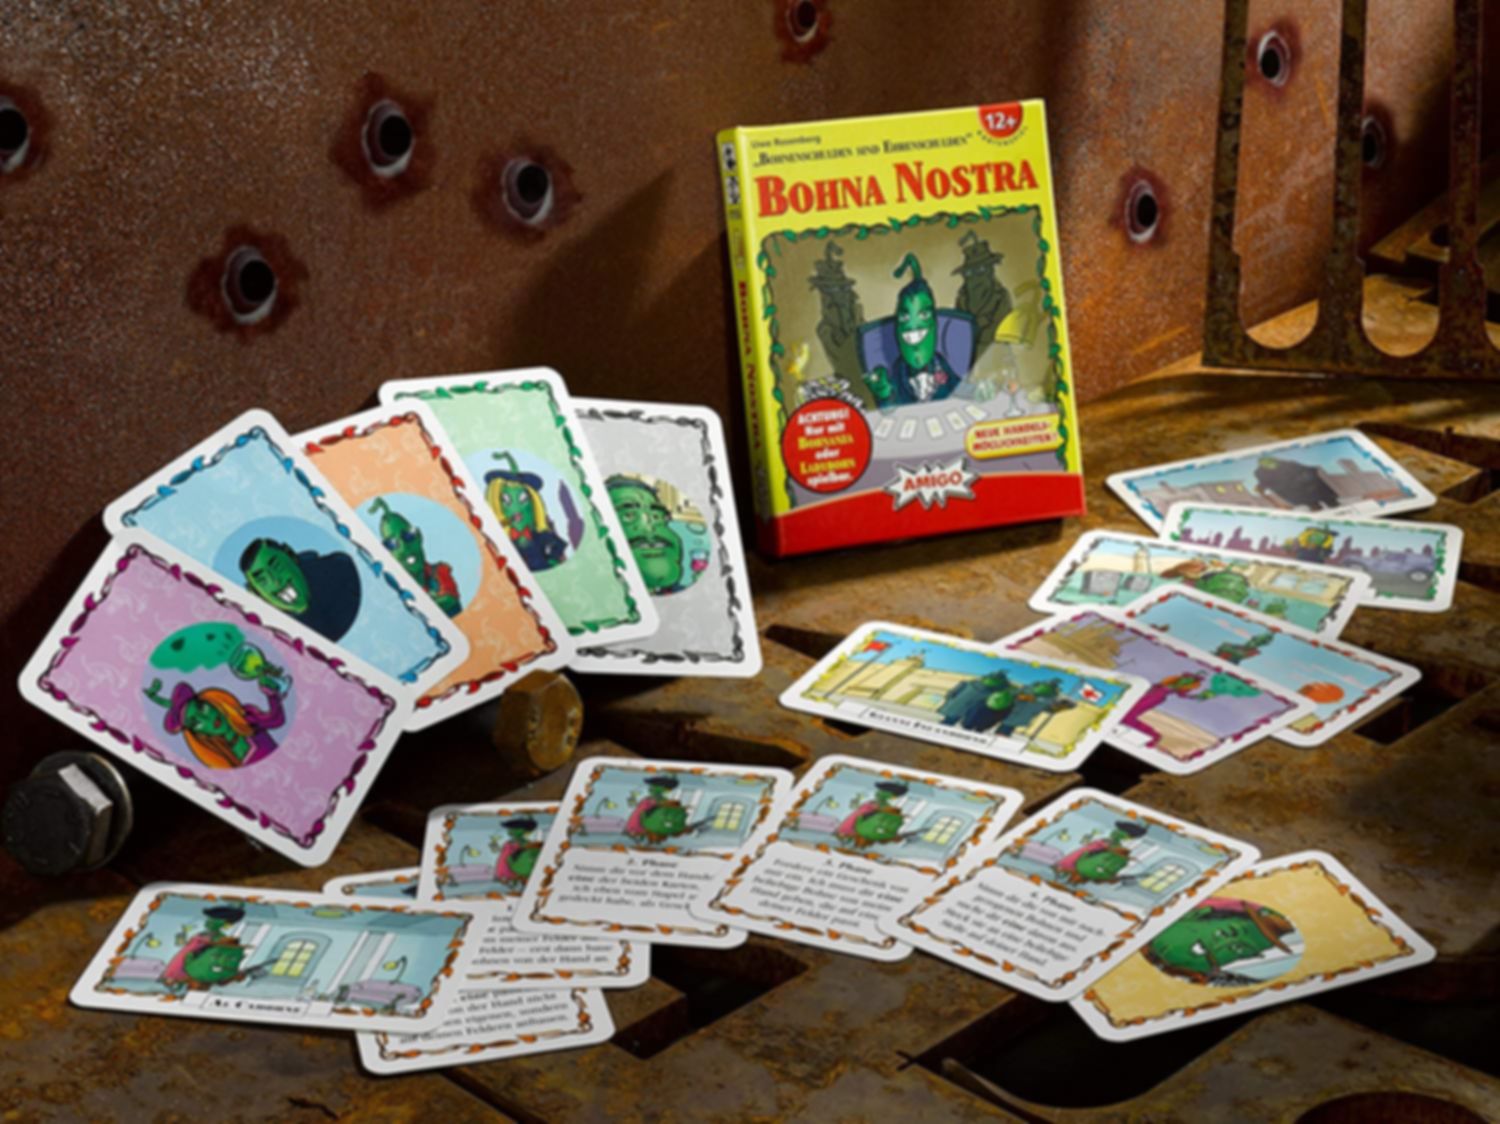 Bohna Nostra cards